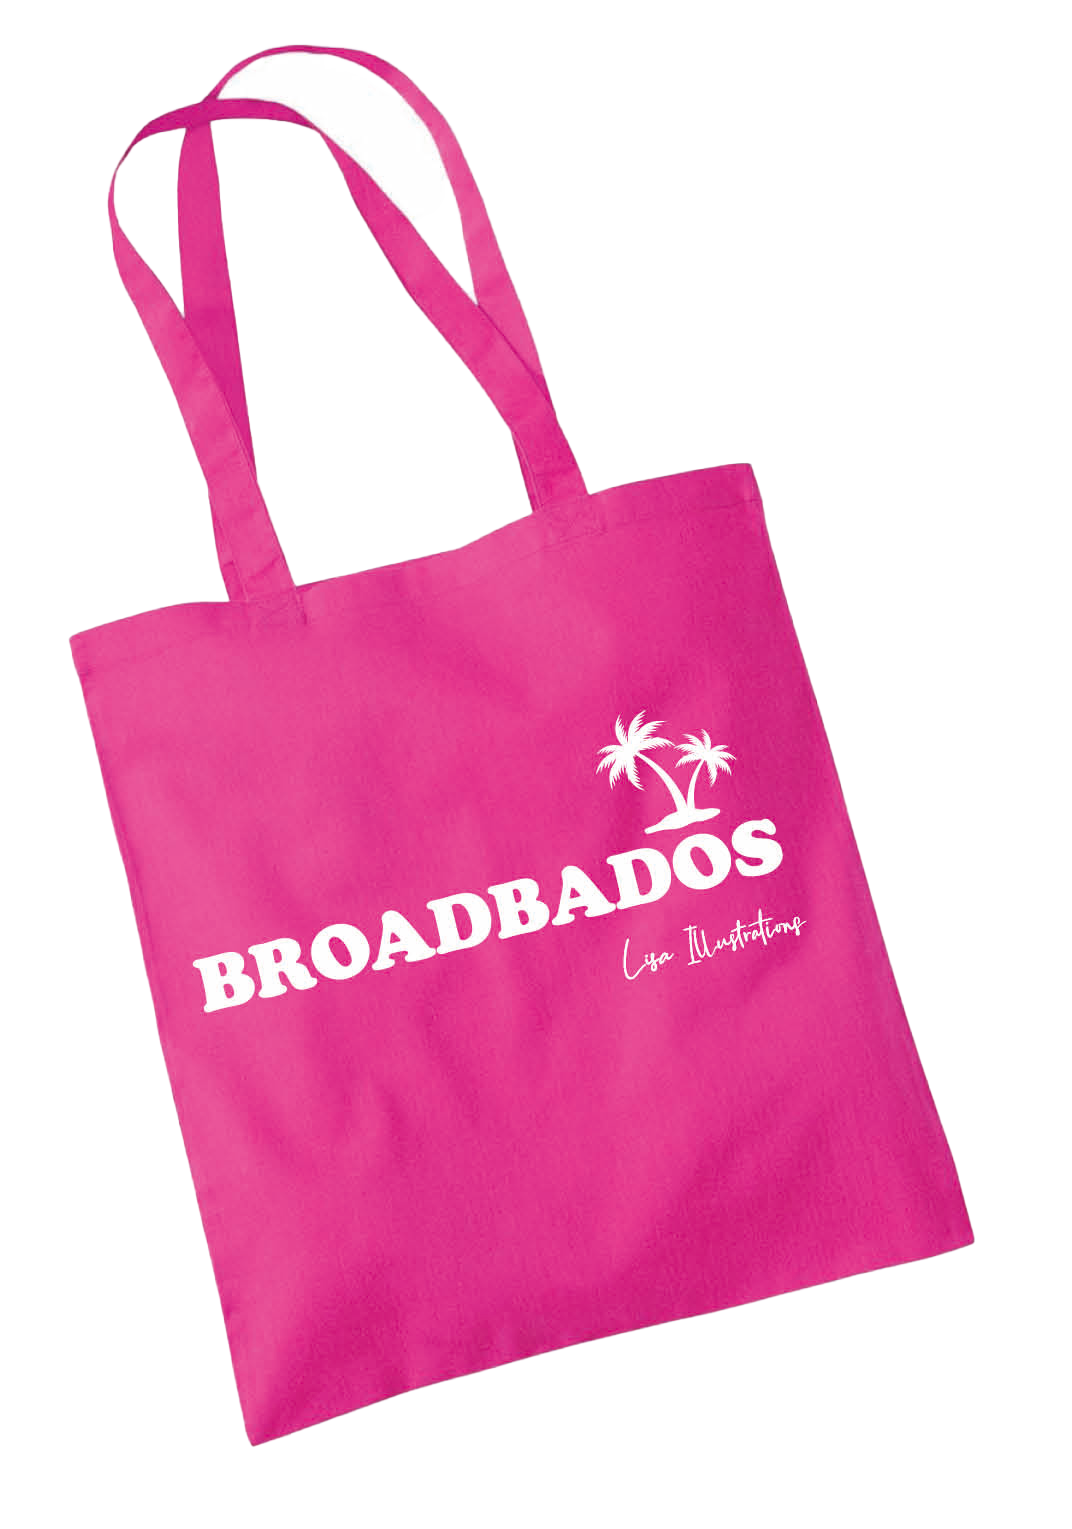 ‘Broadbados’ Tote Bag